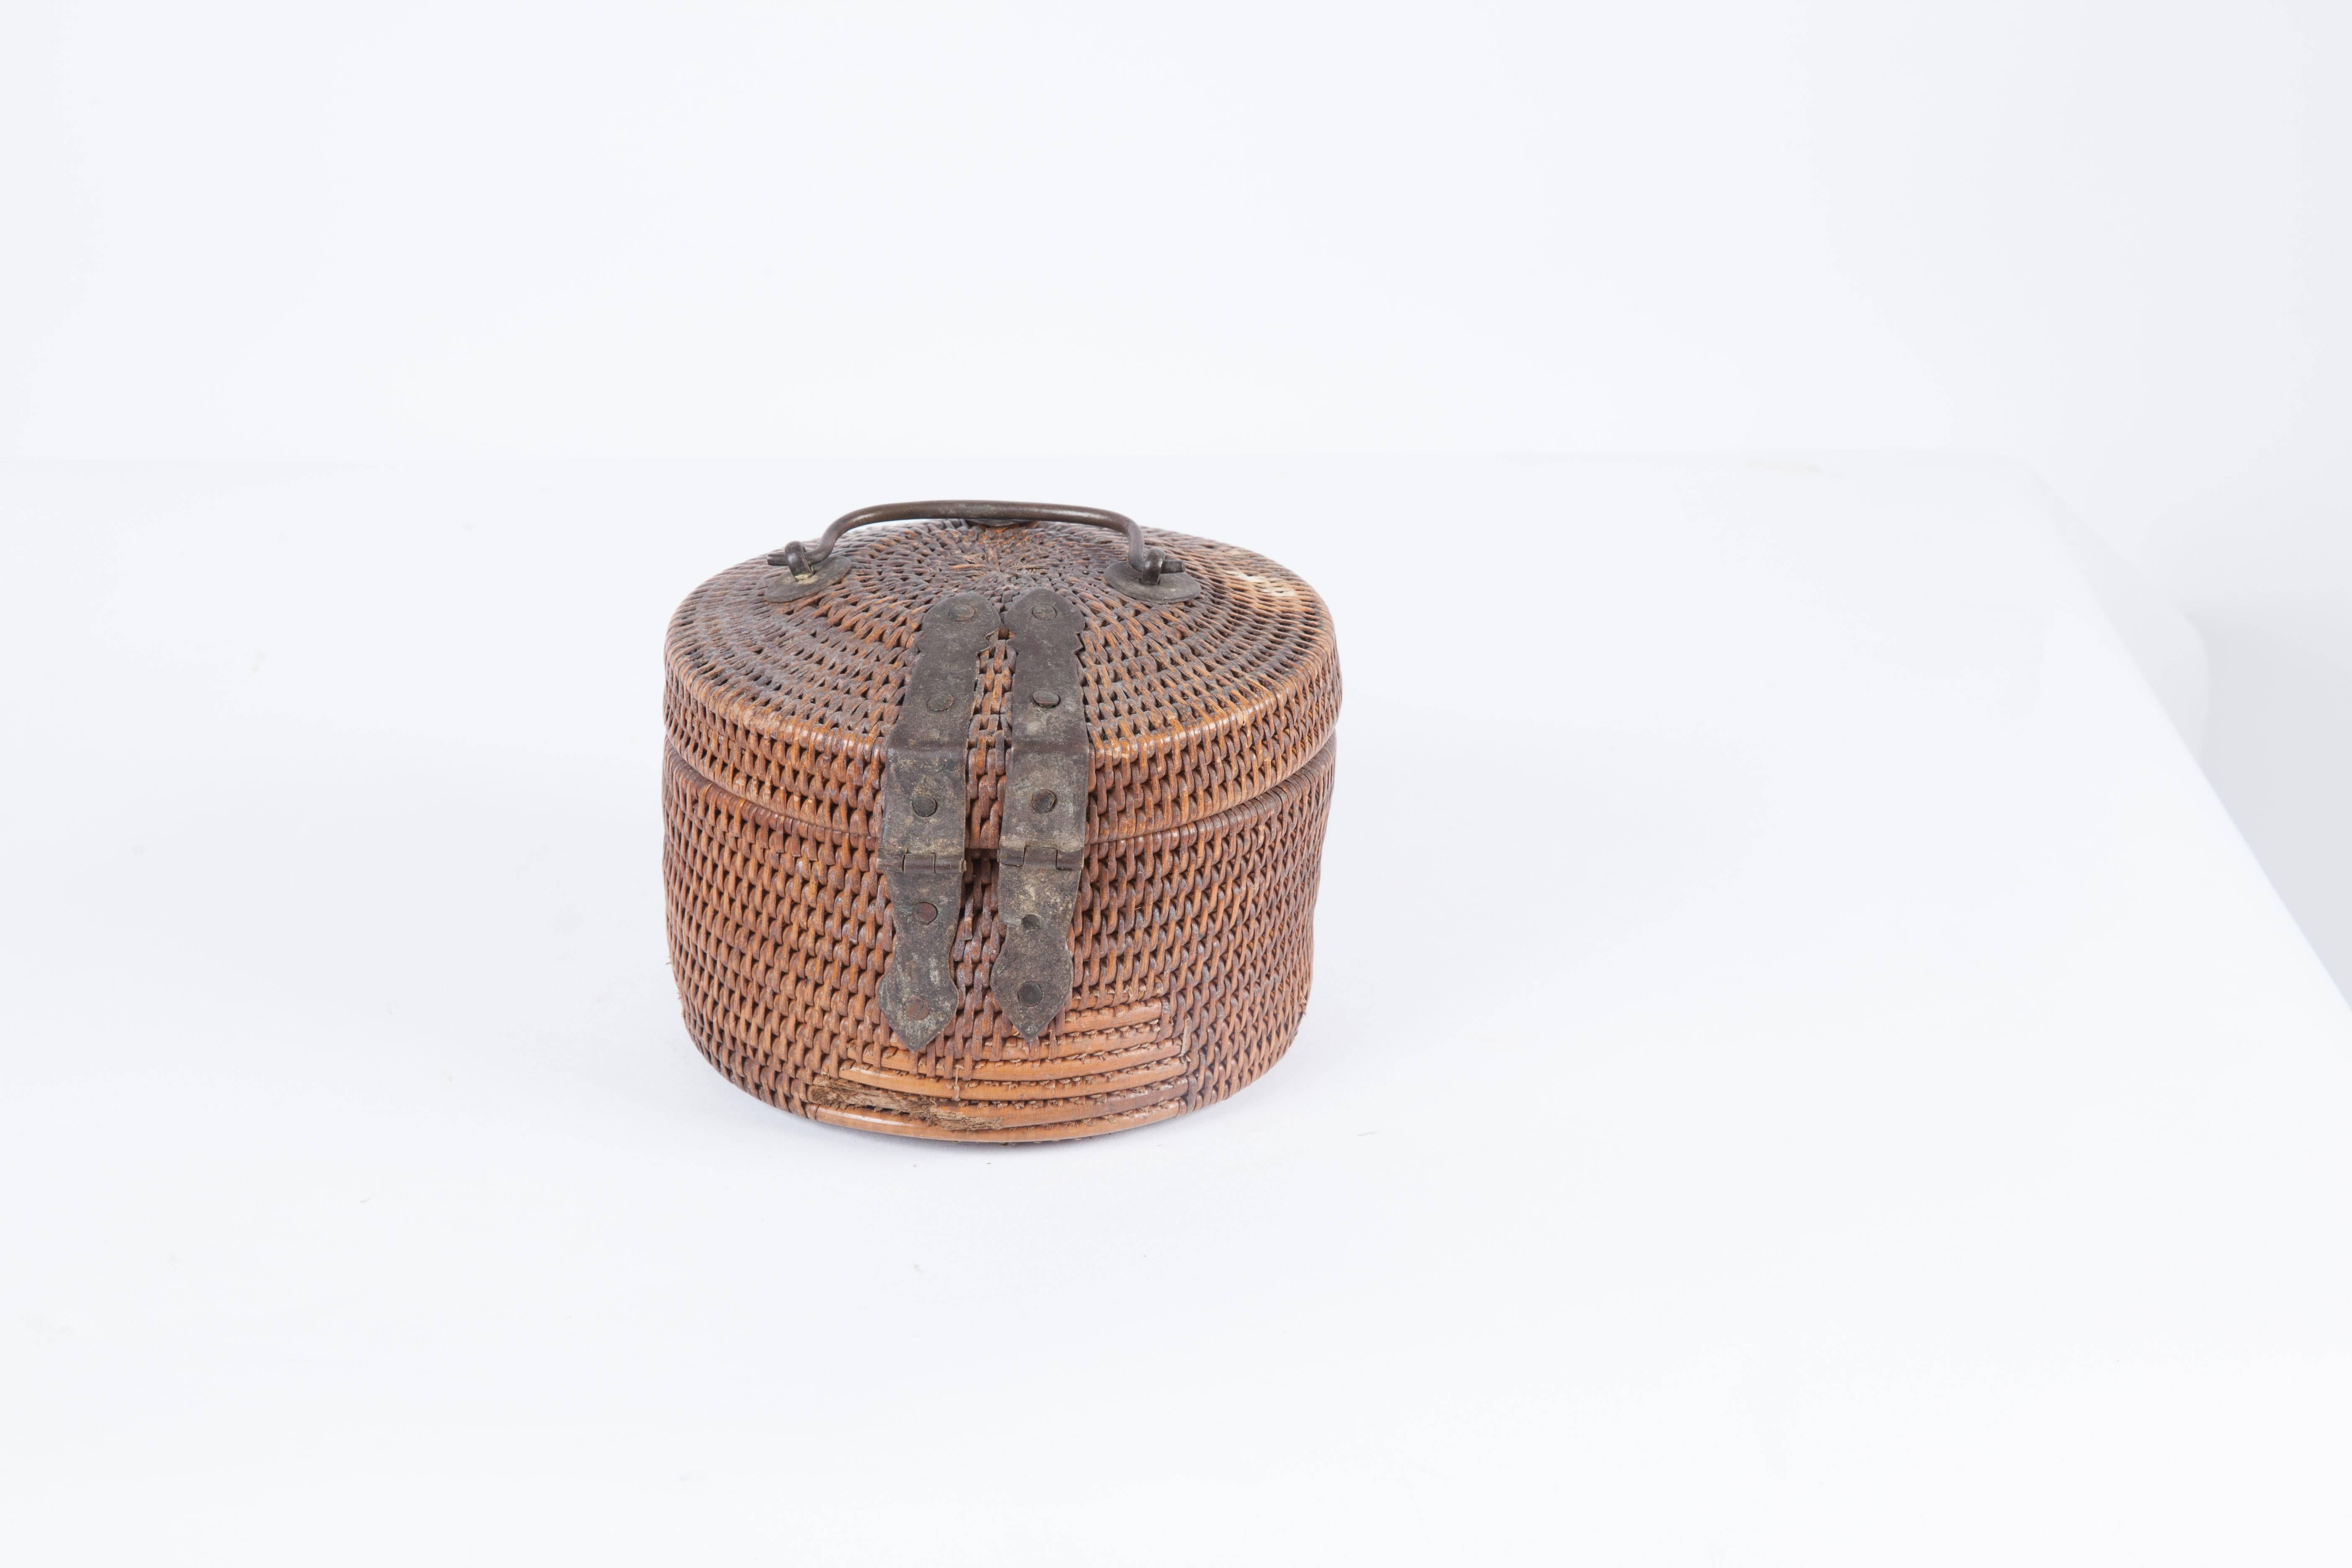 Rattan lidded basket with metal enclosure and handle.